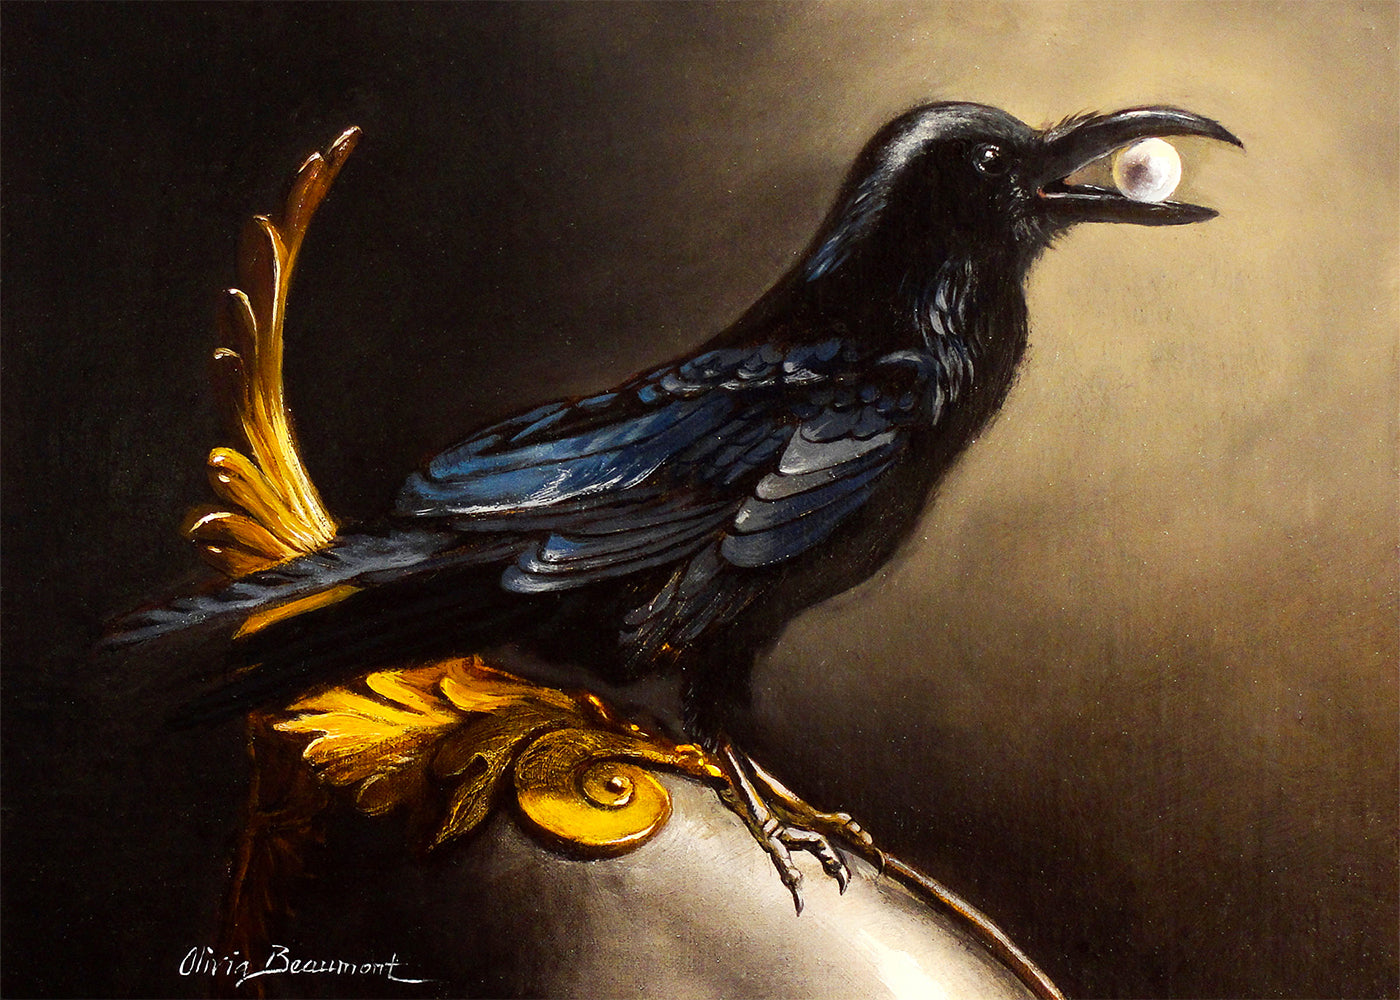 Poet's Pet - raven prints